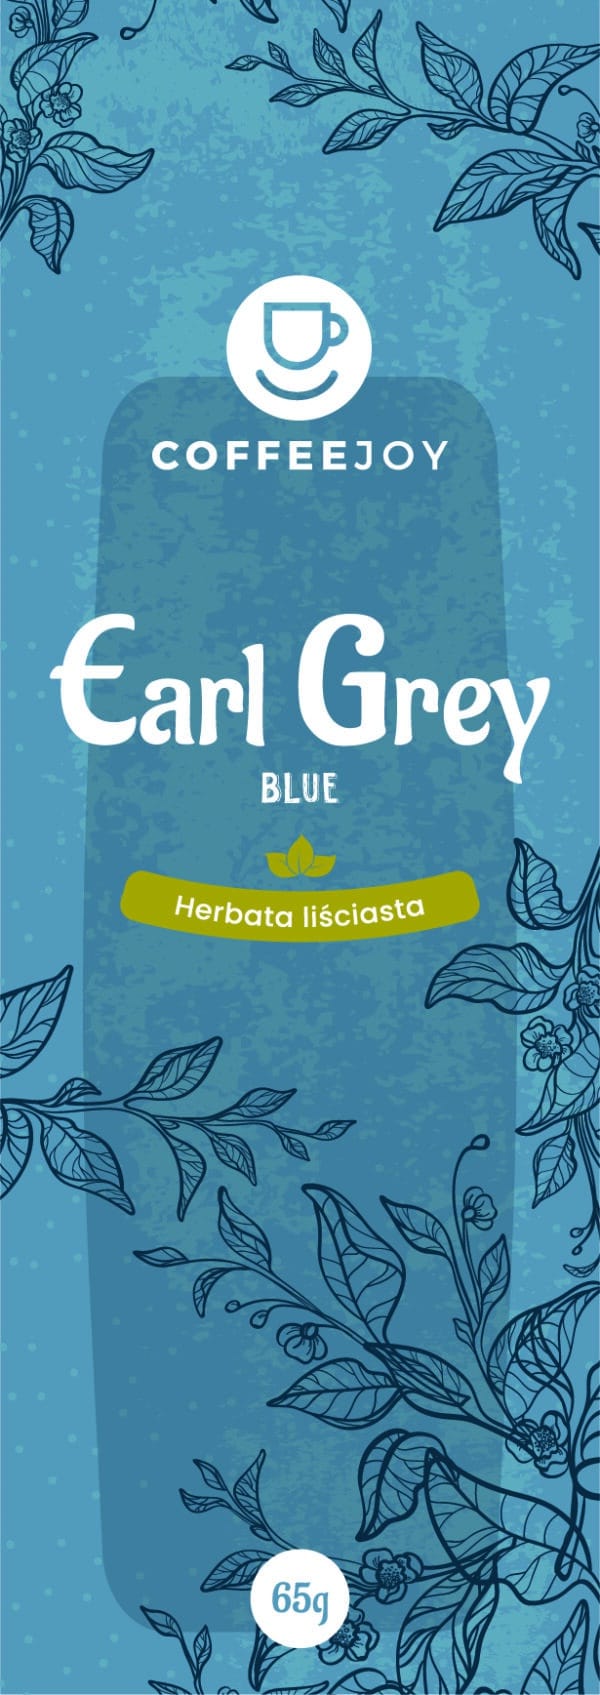 Herbata liściasta Earl Grey Blue